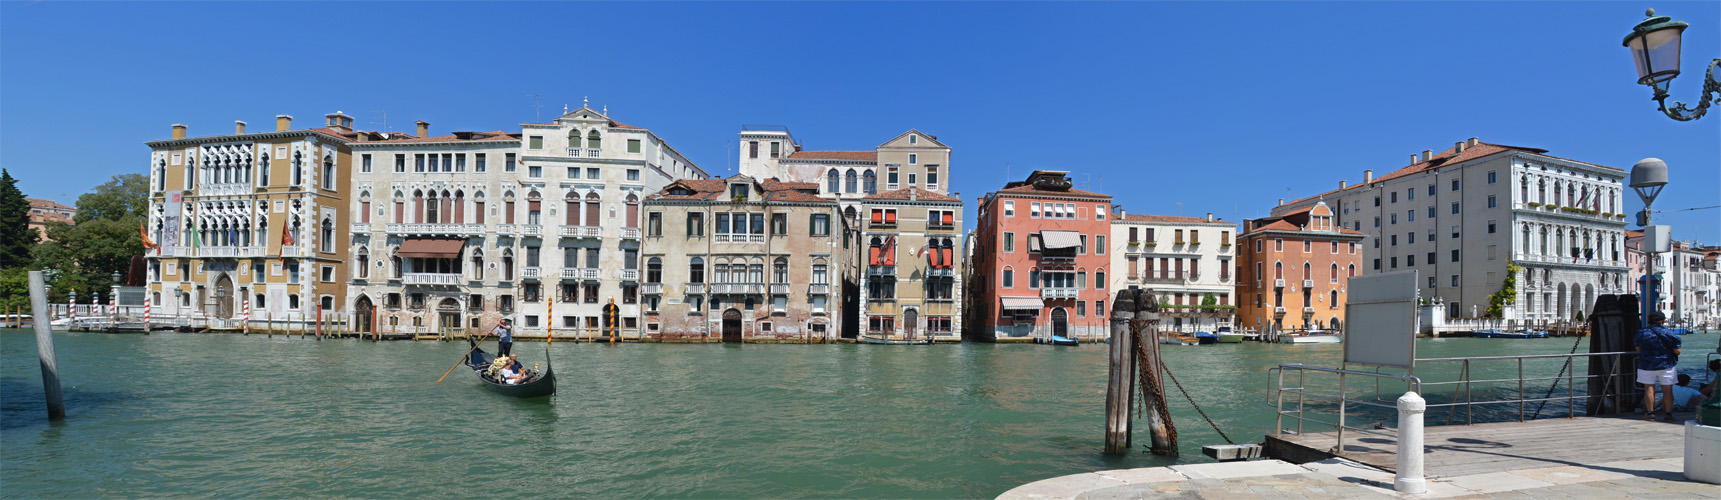 - CANAL GRANDE - Venedig - reloaded